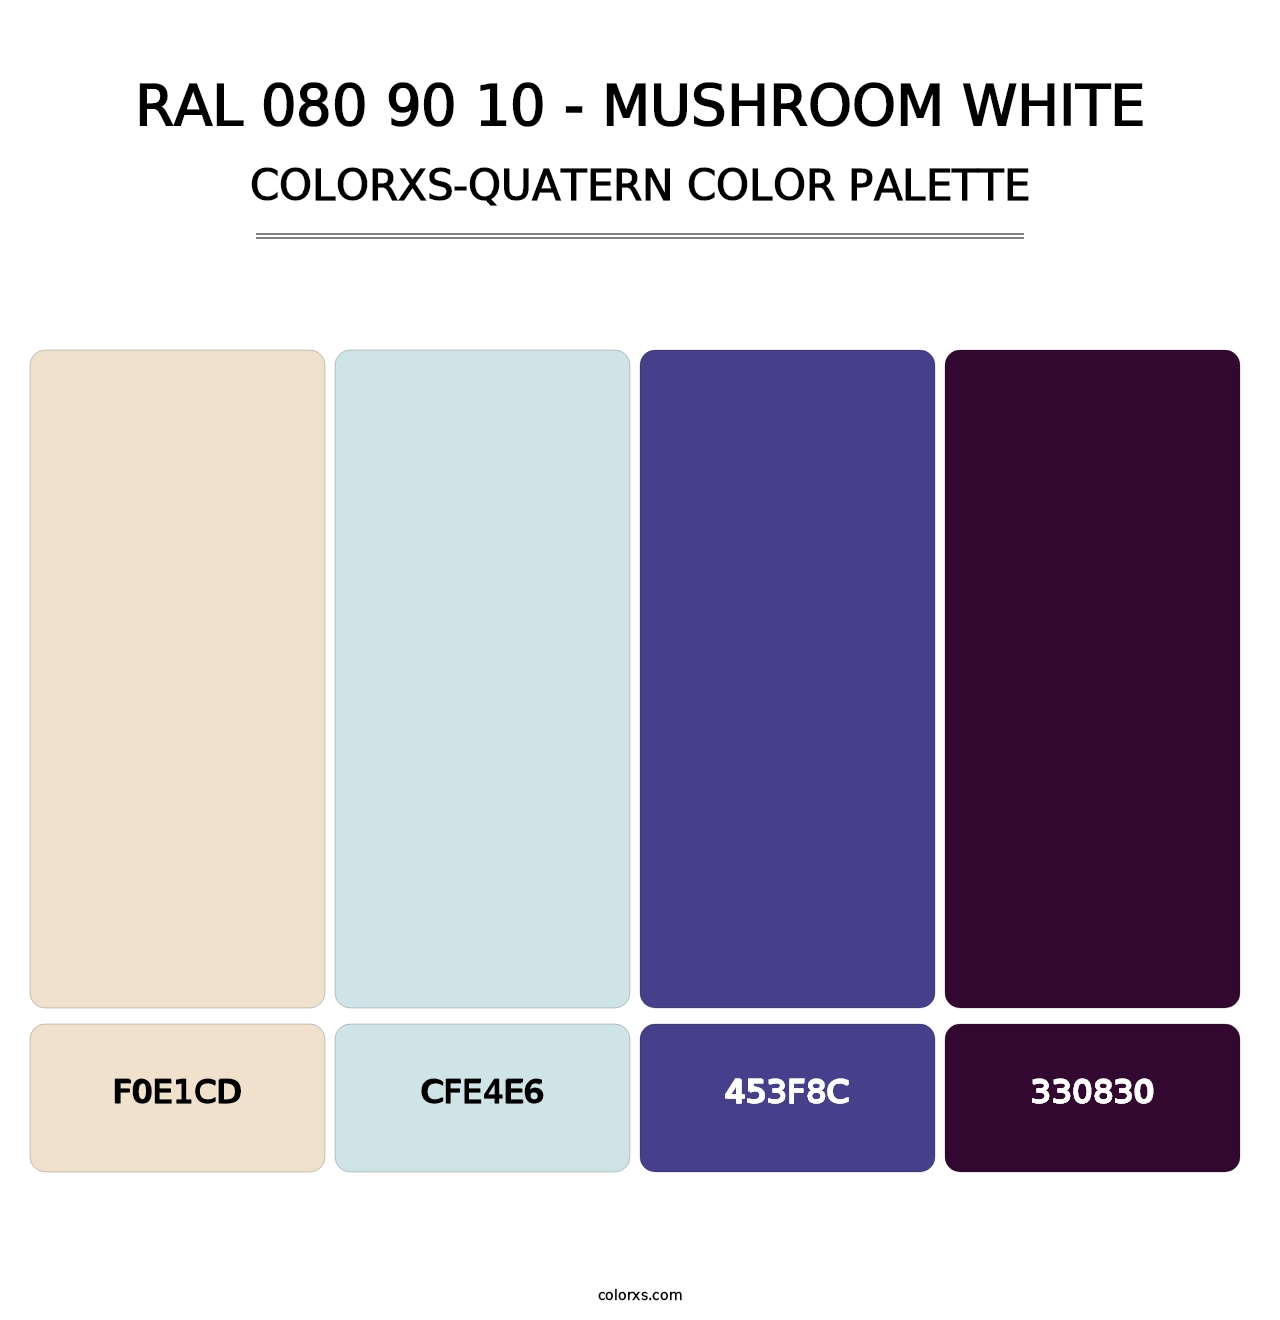 RAL 080 90 10 - Mushroom White - Colorxs Quatern Palette